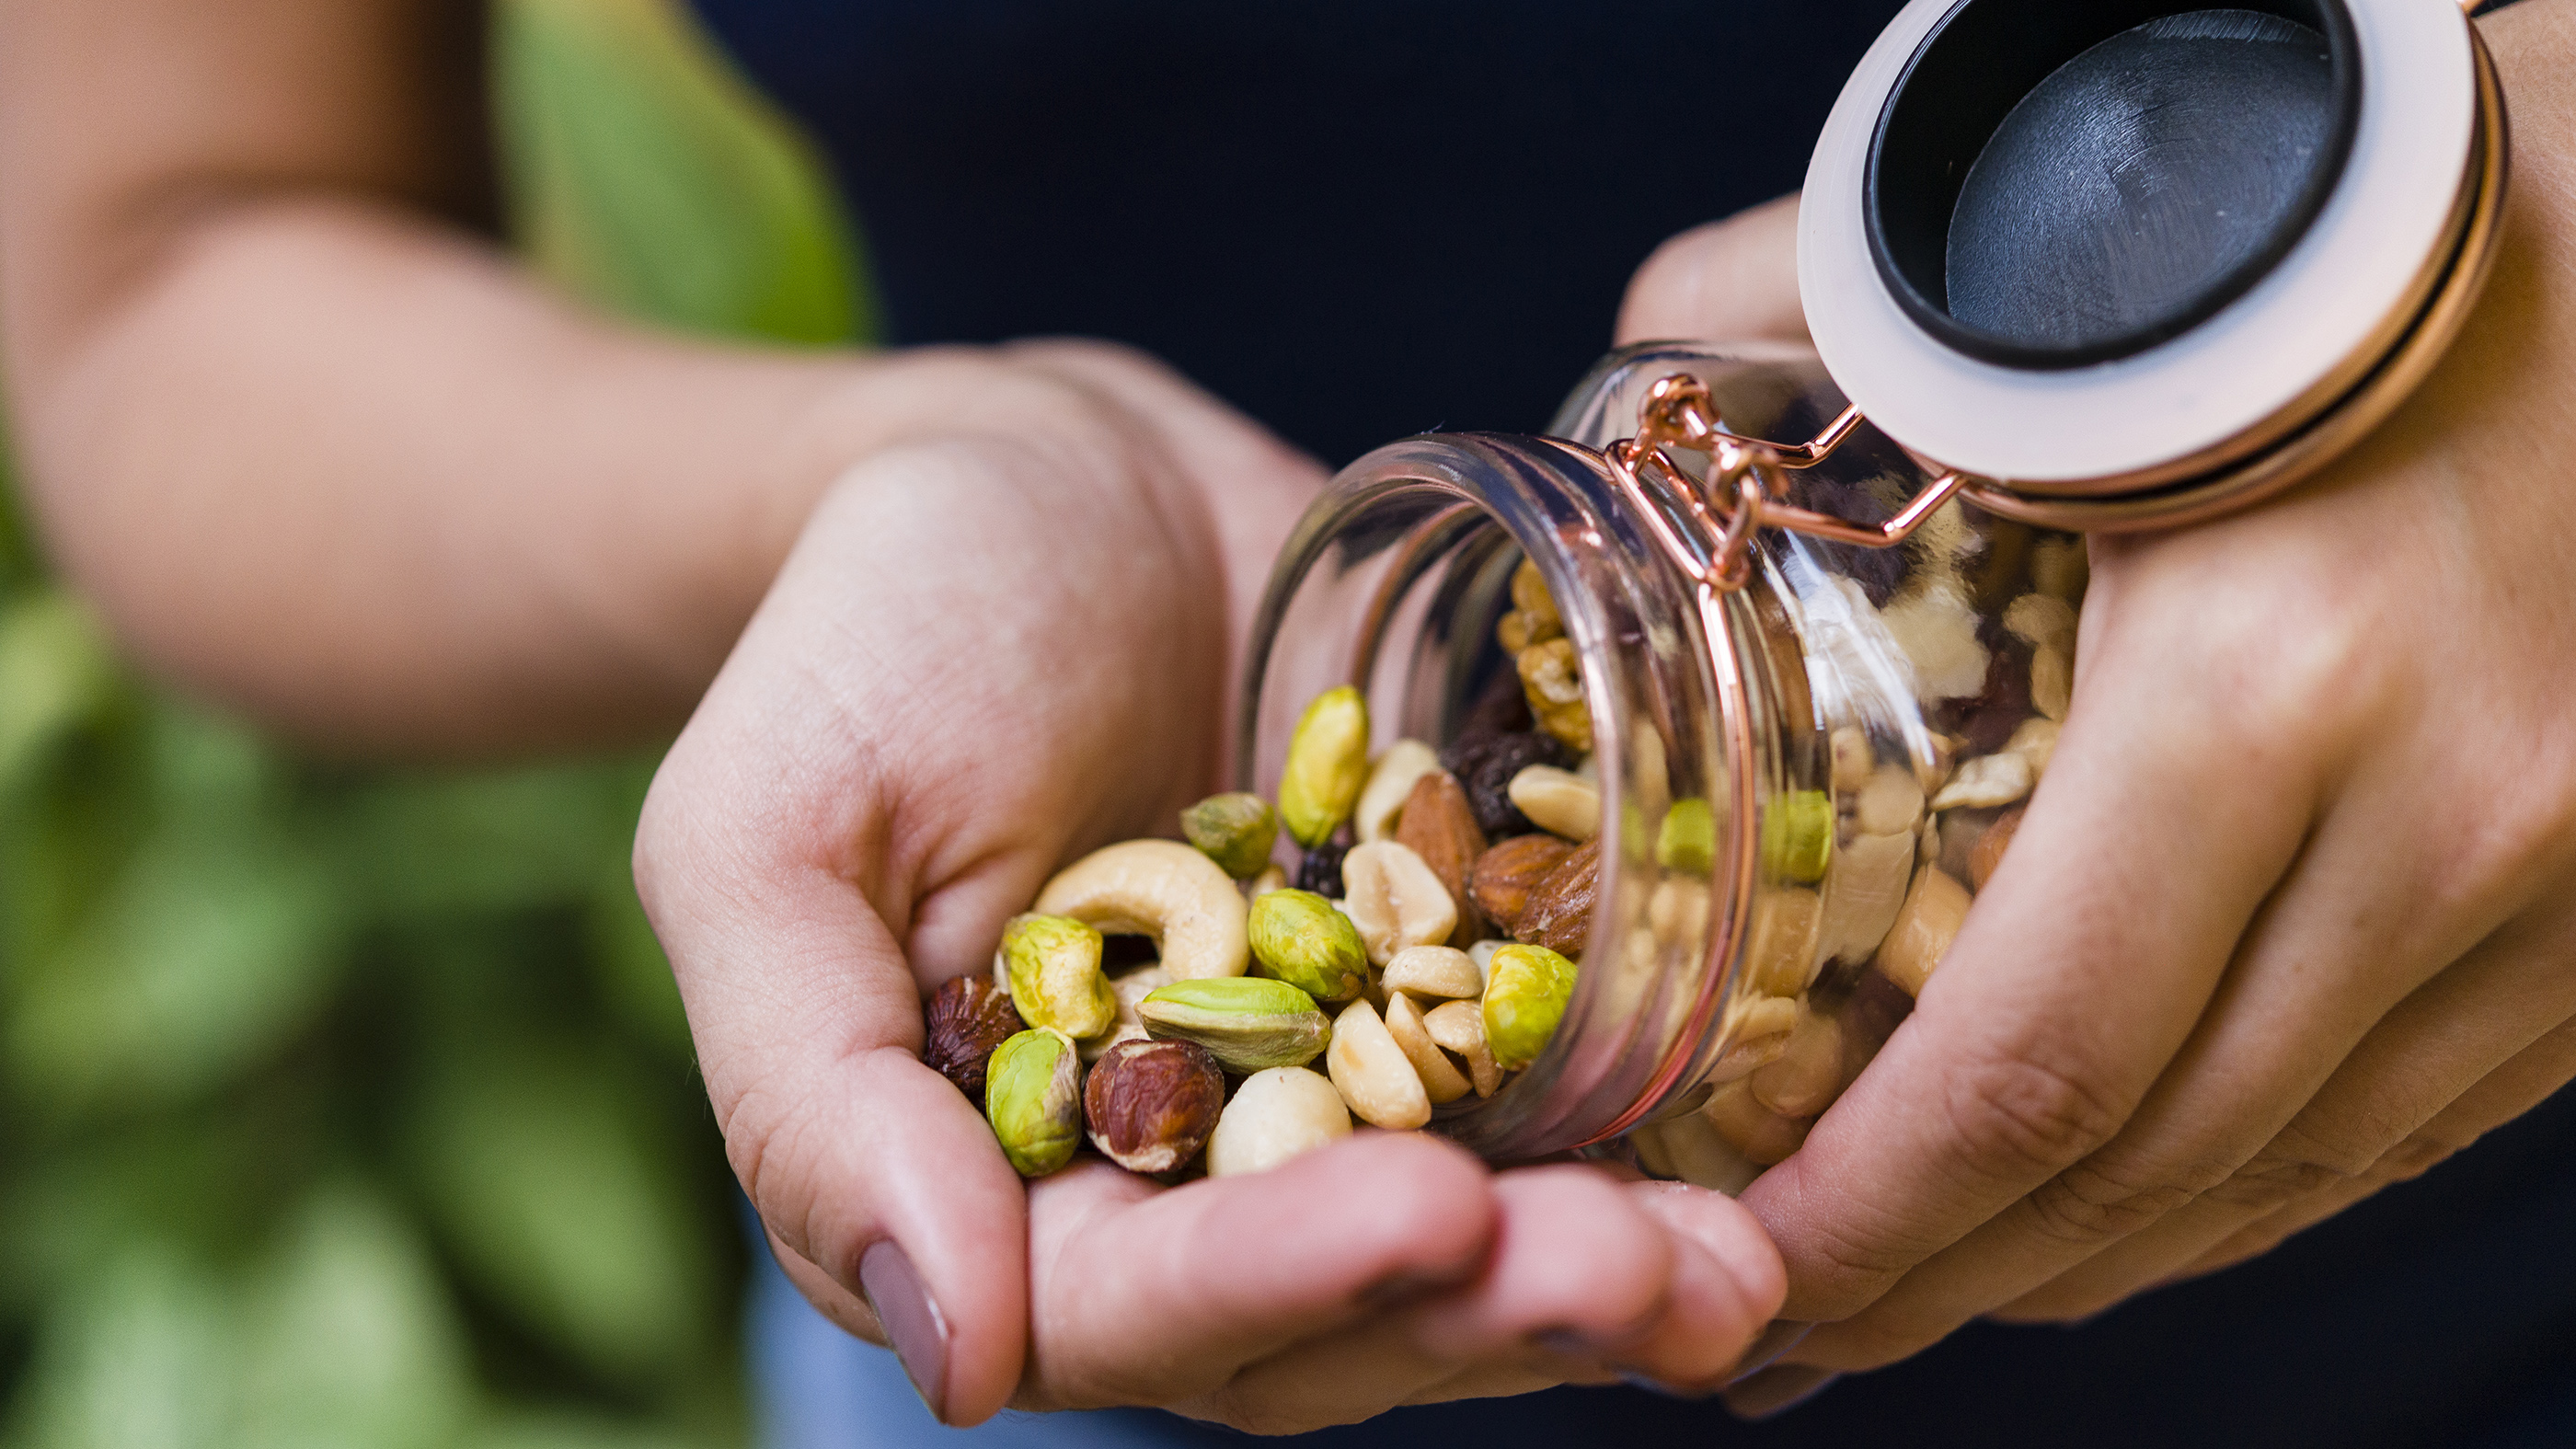 A jar of nuts